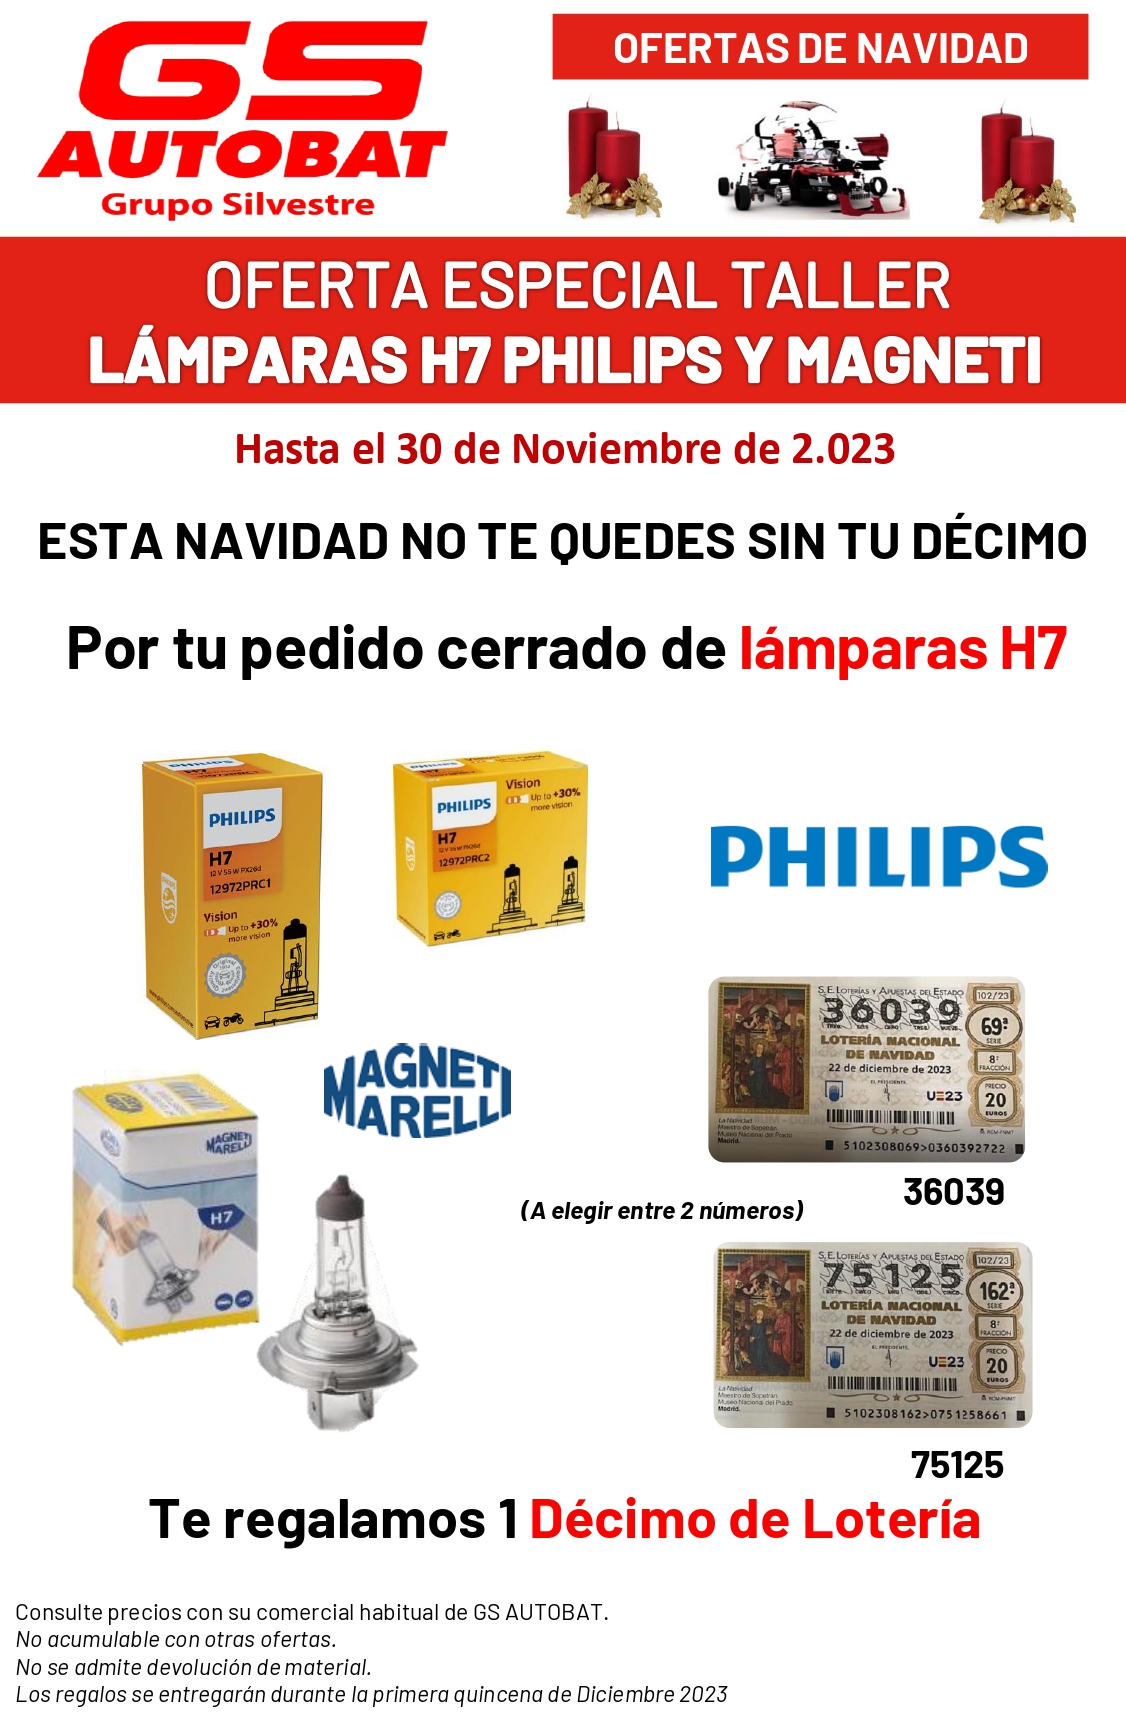 LÁMPARAS PHILIPS Y MAGNETI MARELLI>